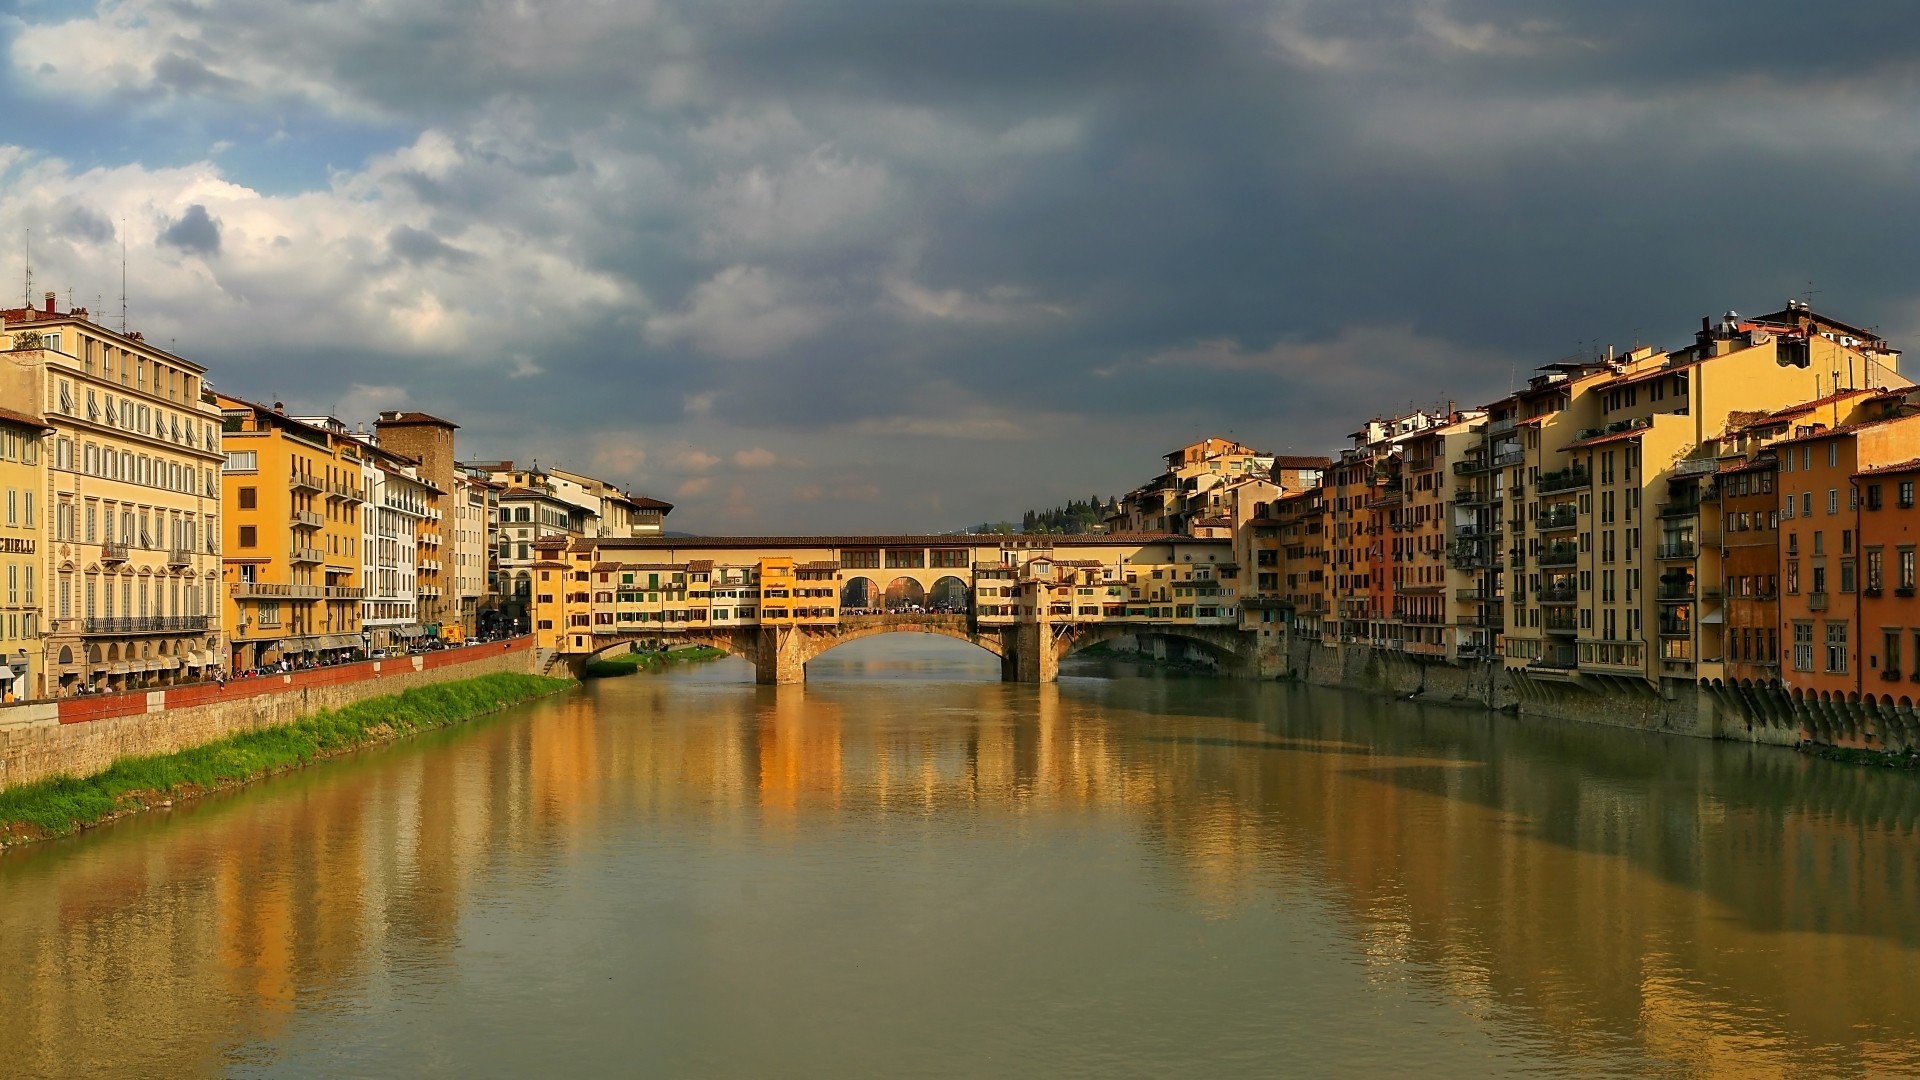 General 1920x1080 city cityscape river architecture nature clouds building water bridge town Italy crowds reflection ponte vecchio Florence